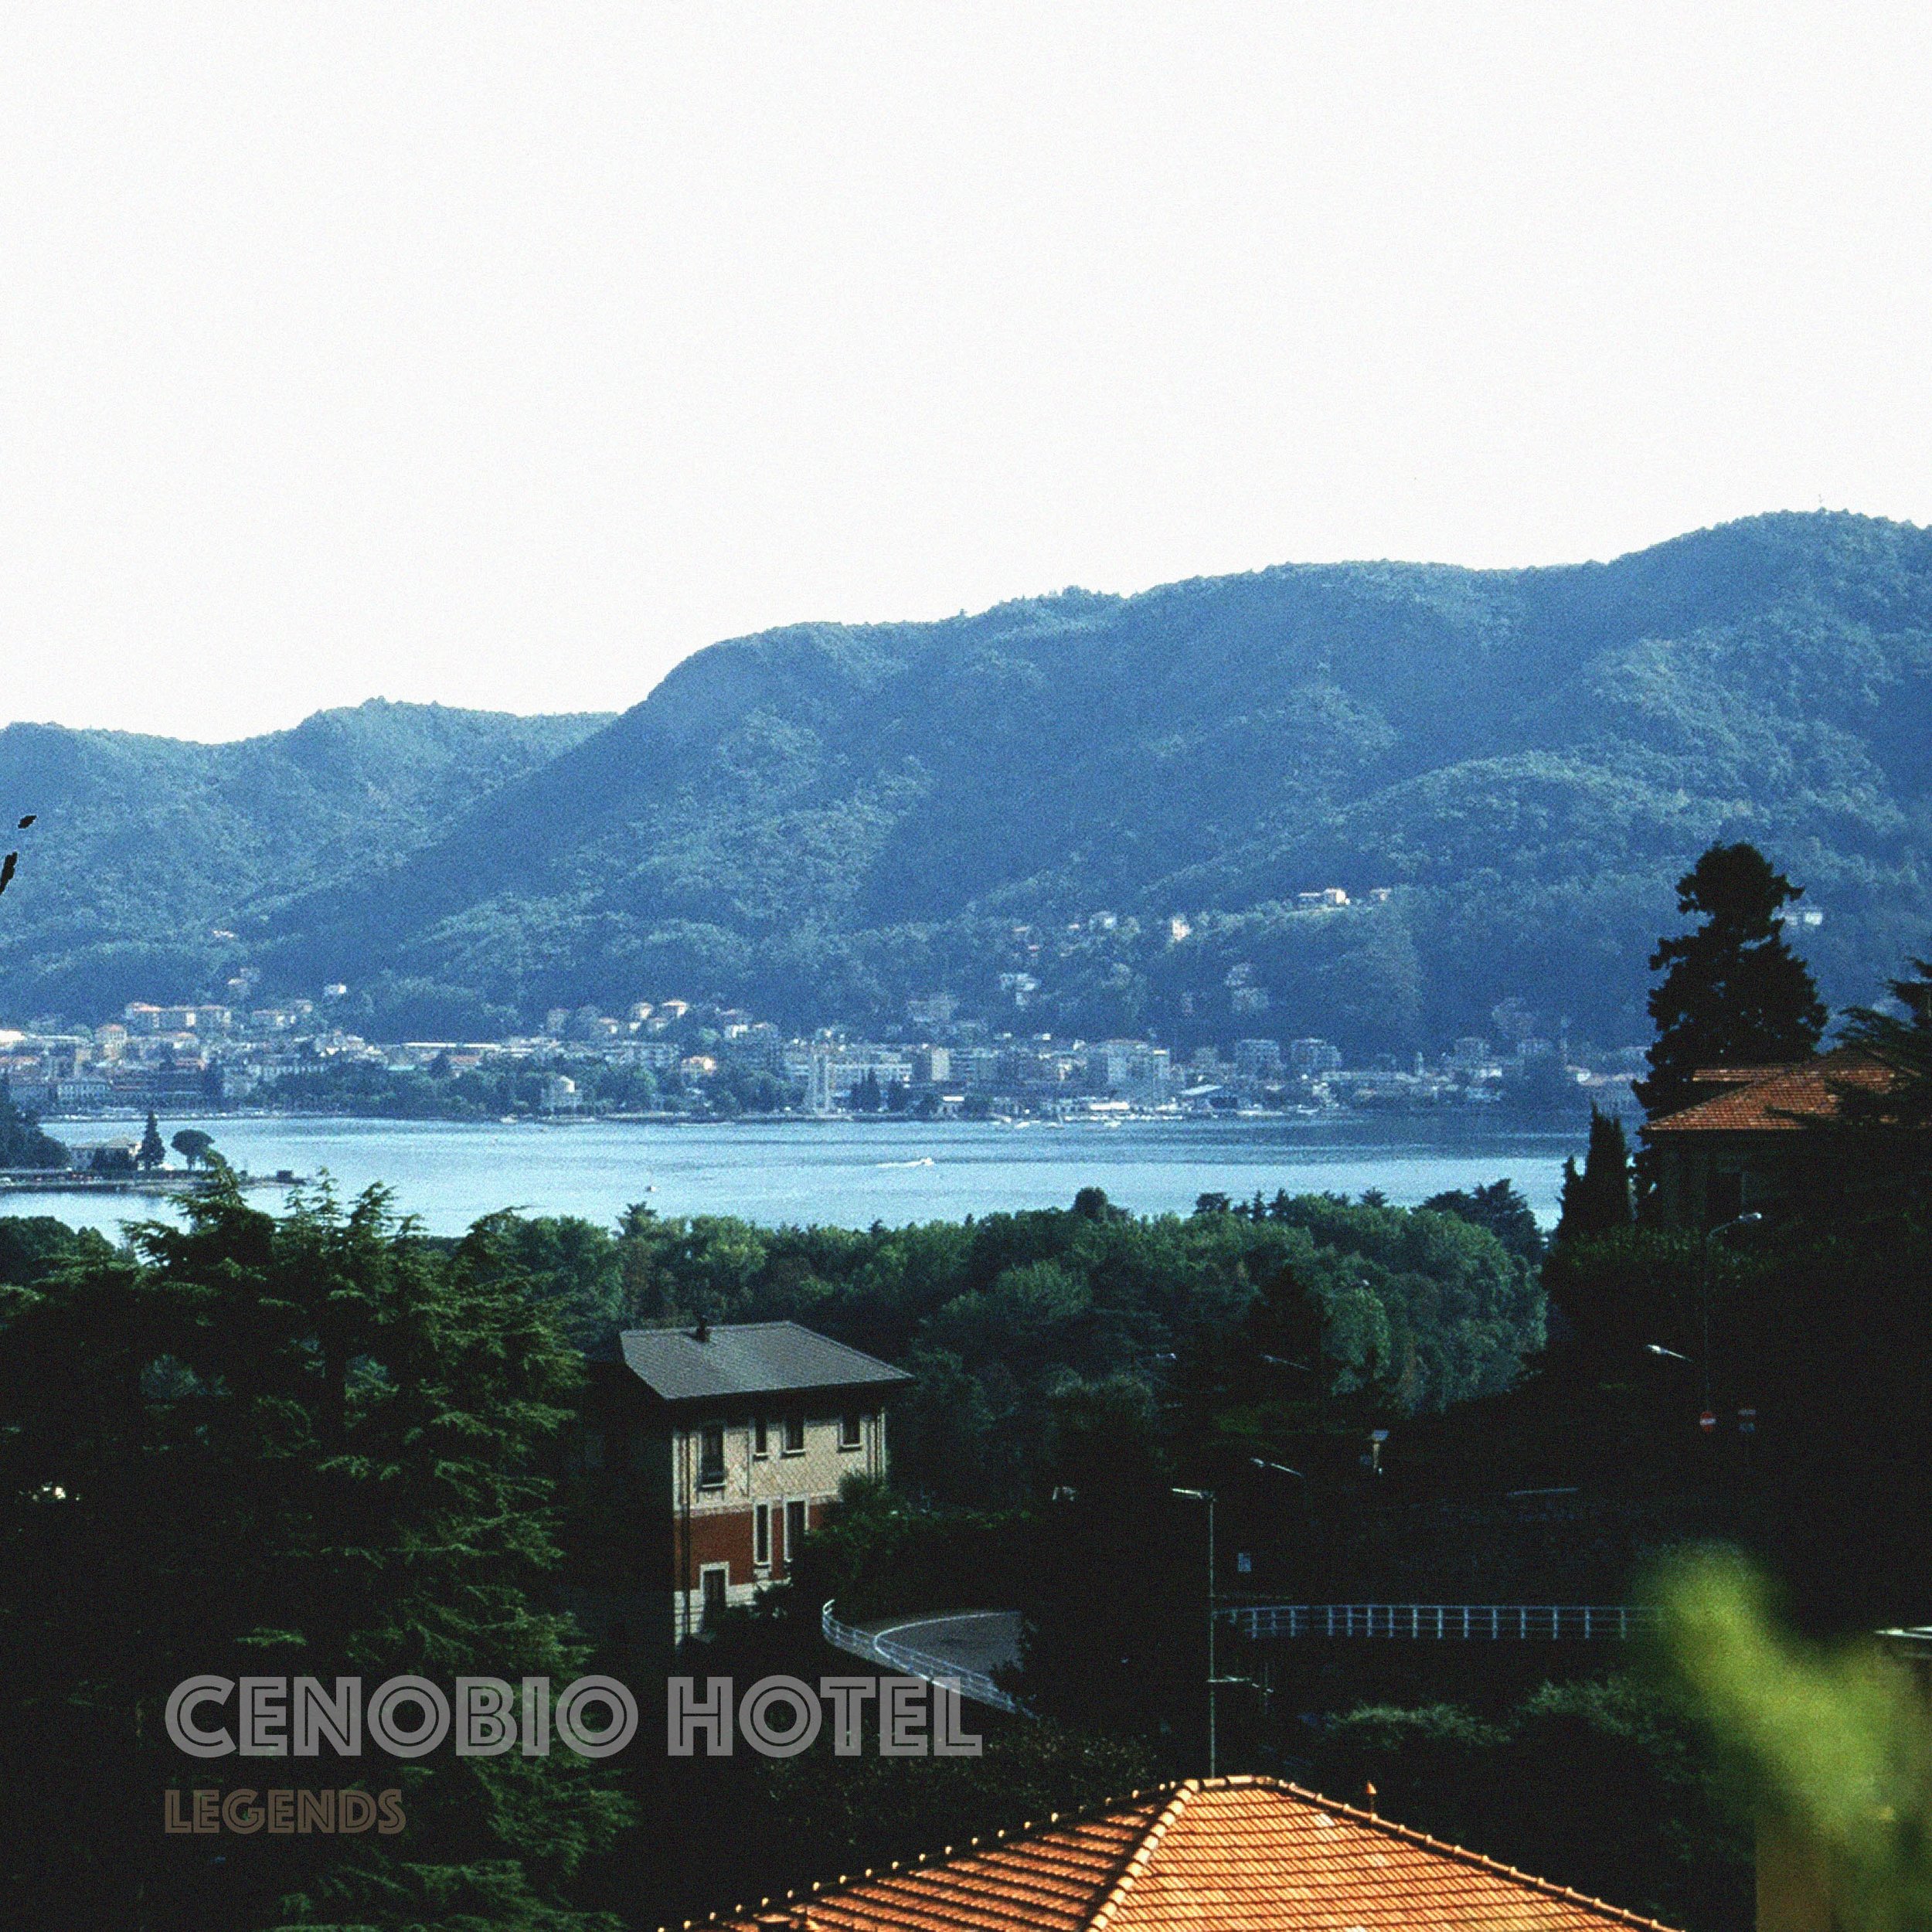 Cenobio Hotel_Legends_Art copy.jpg